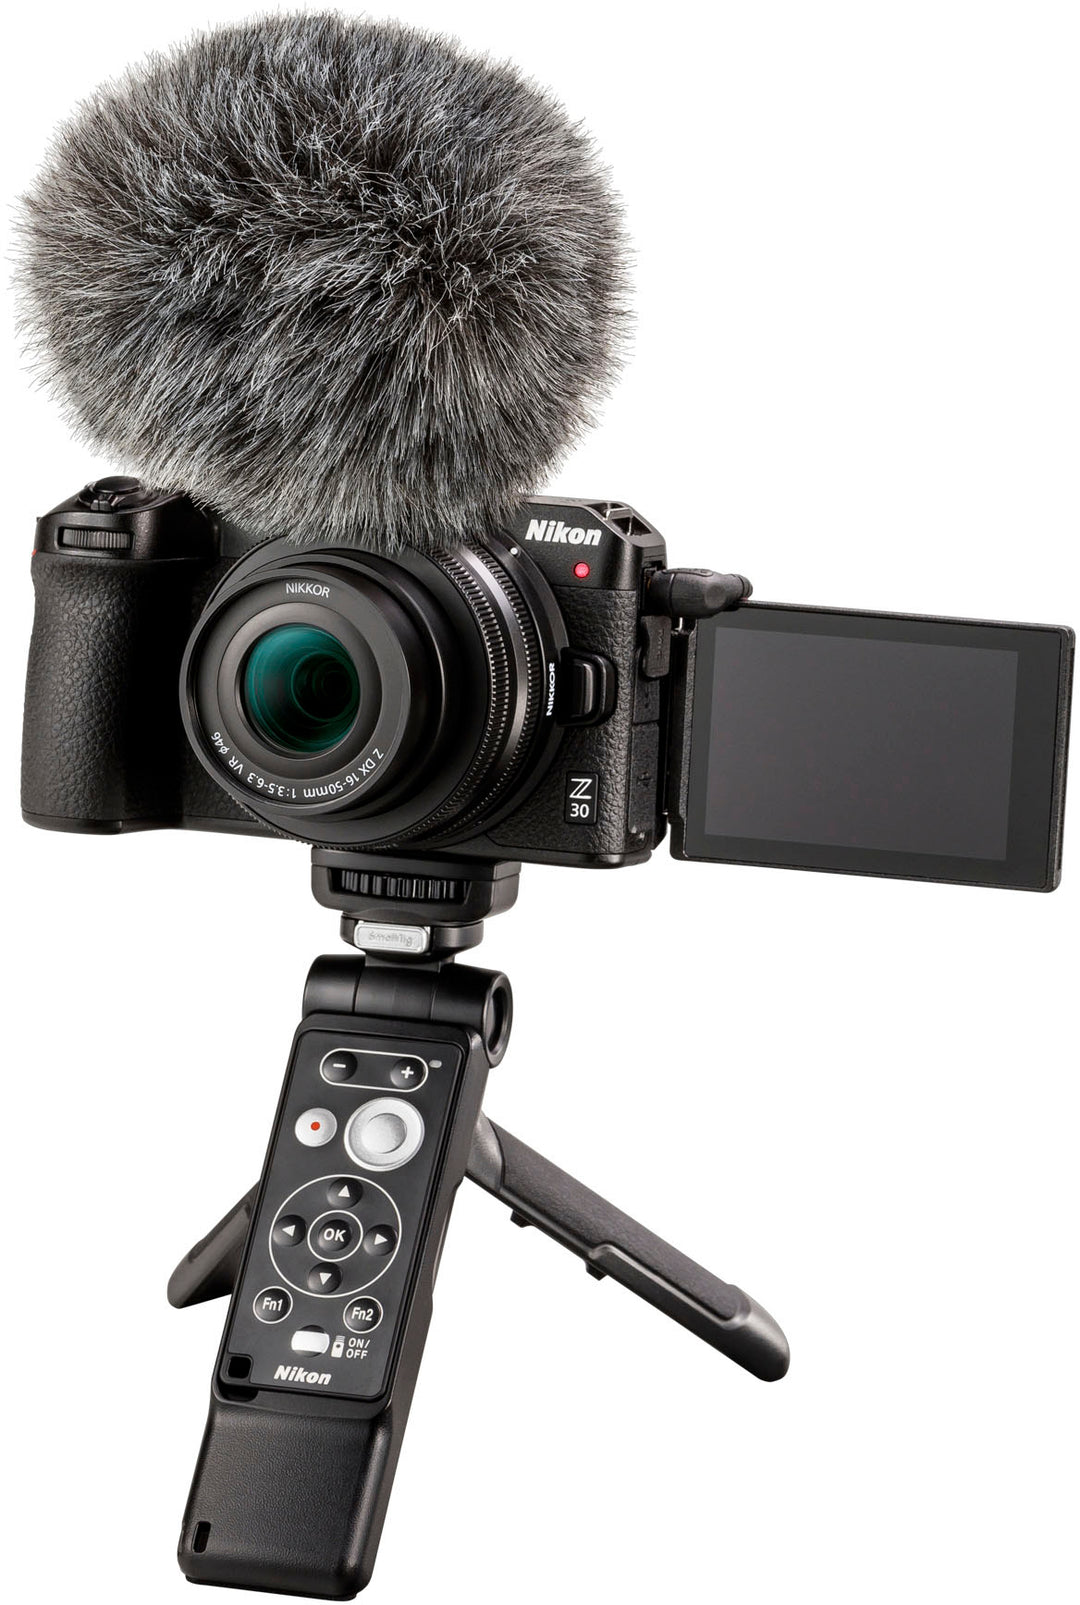 Z 30 Creator's Kit with NIKKOR Z DX 16-50mm f/3.5-6.3 VR lens, Nikon Bluetooth Remote, SmallRig Grip Microphone_5